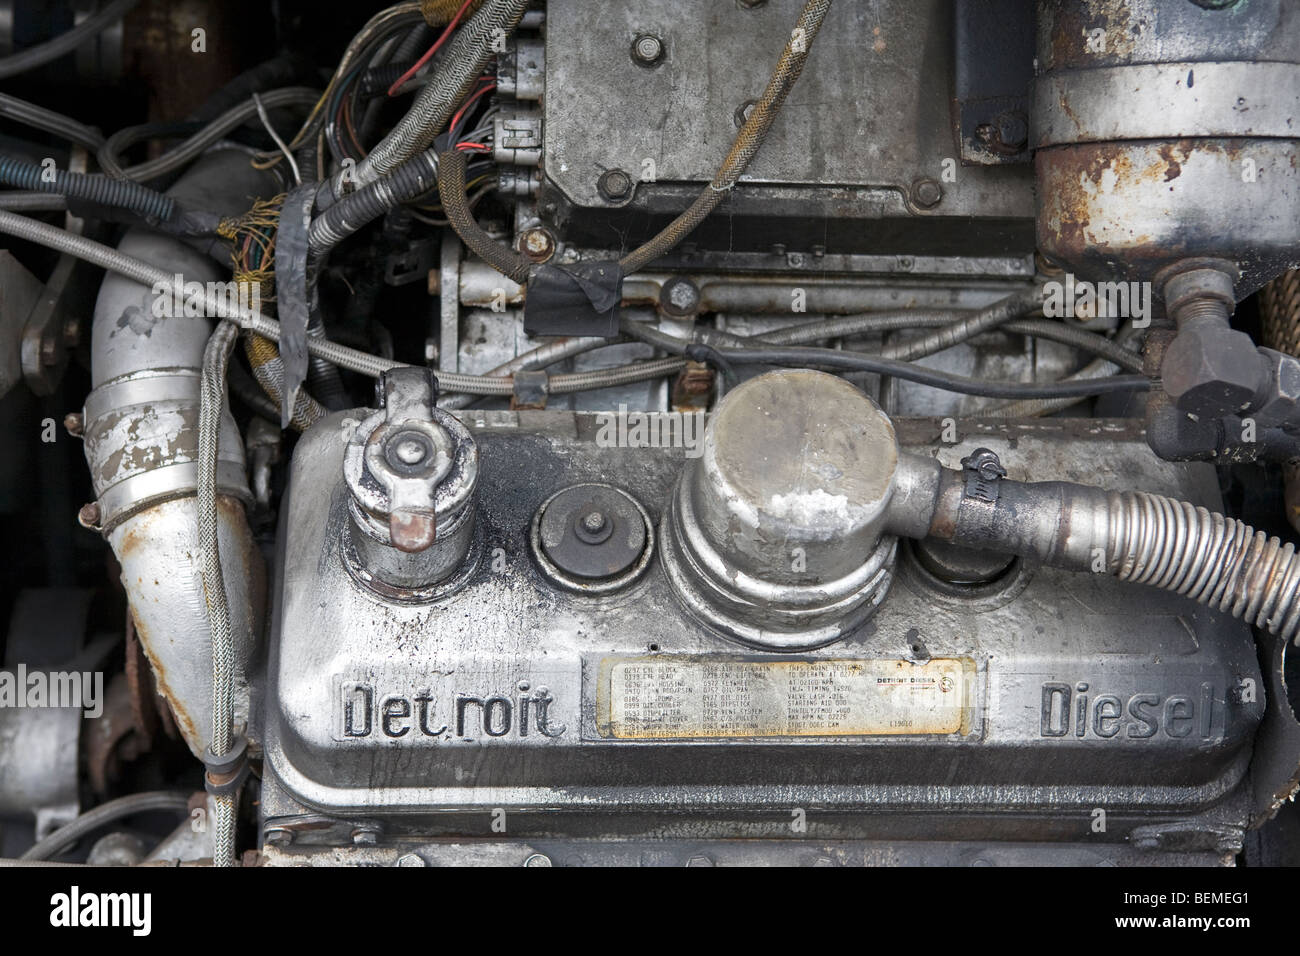 Old Detroit diesel engine Stock Photo